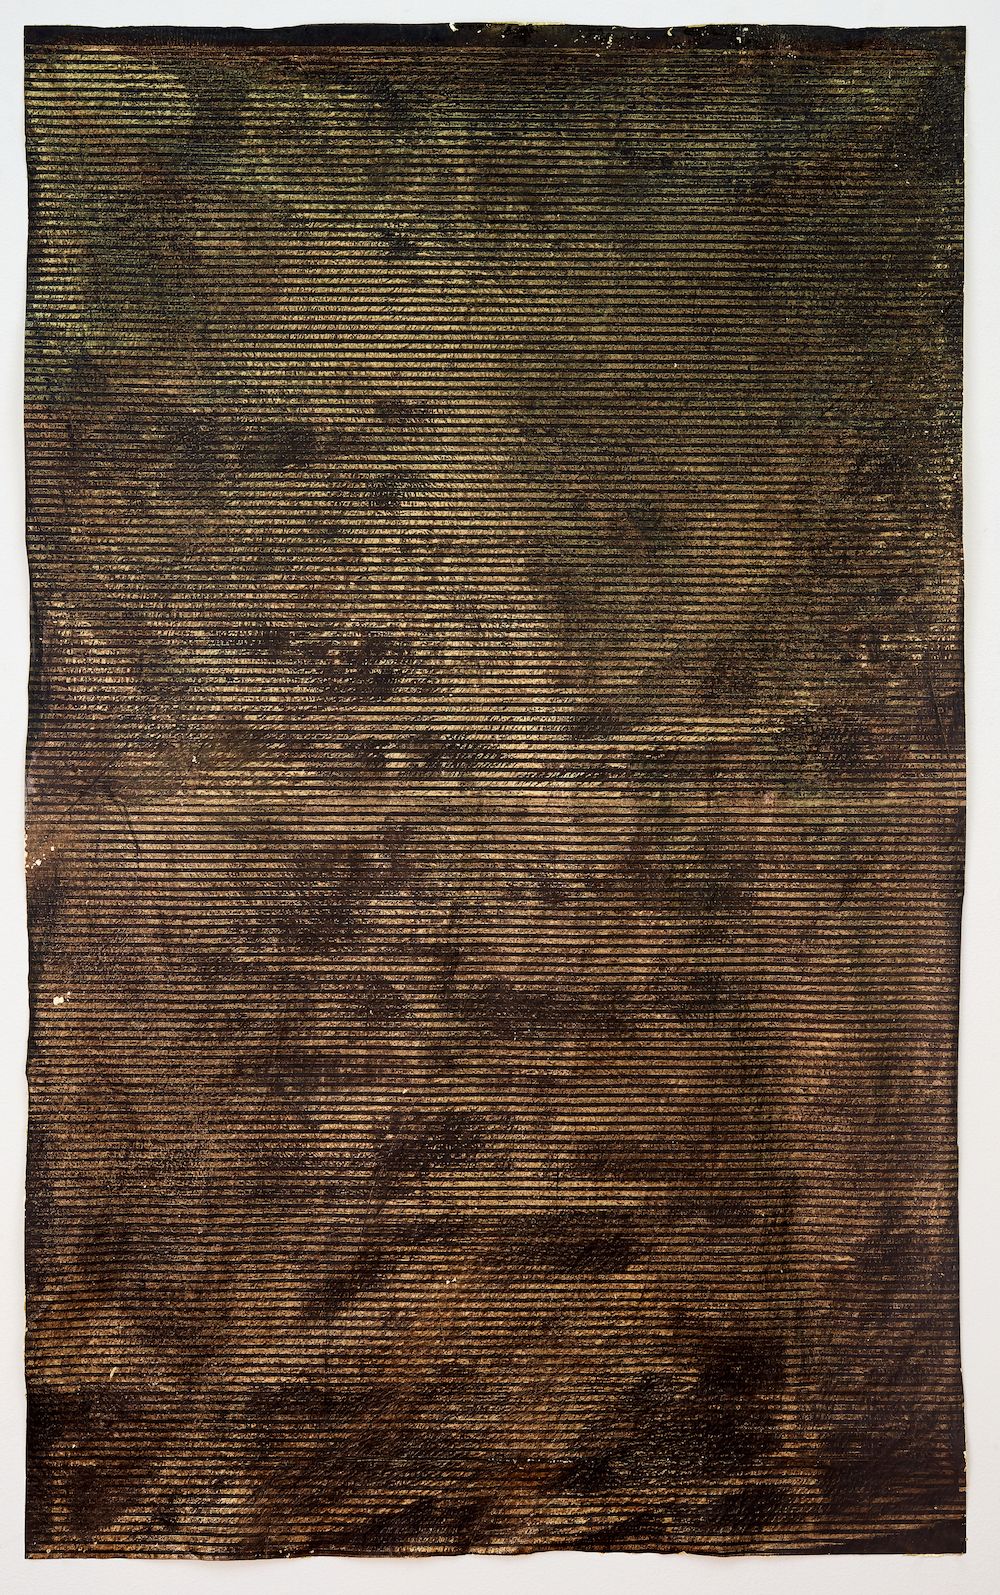 Ronny Quevedo, equatorial horizons, 2019, gold leaf on carbon paper, 42 x 25 3⁄4 in. (106.68 x 65.41 cm) 